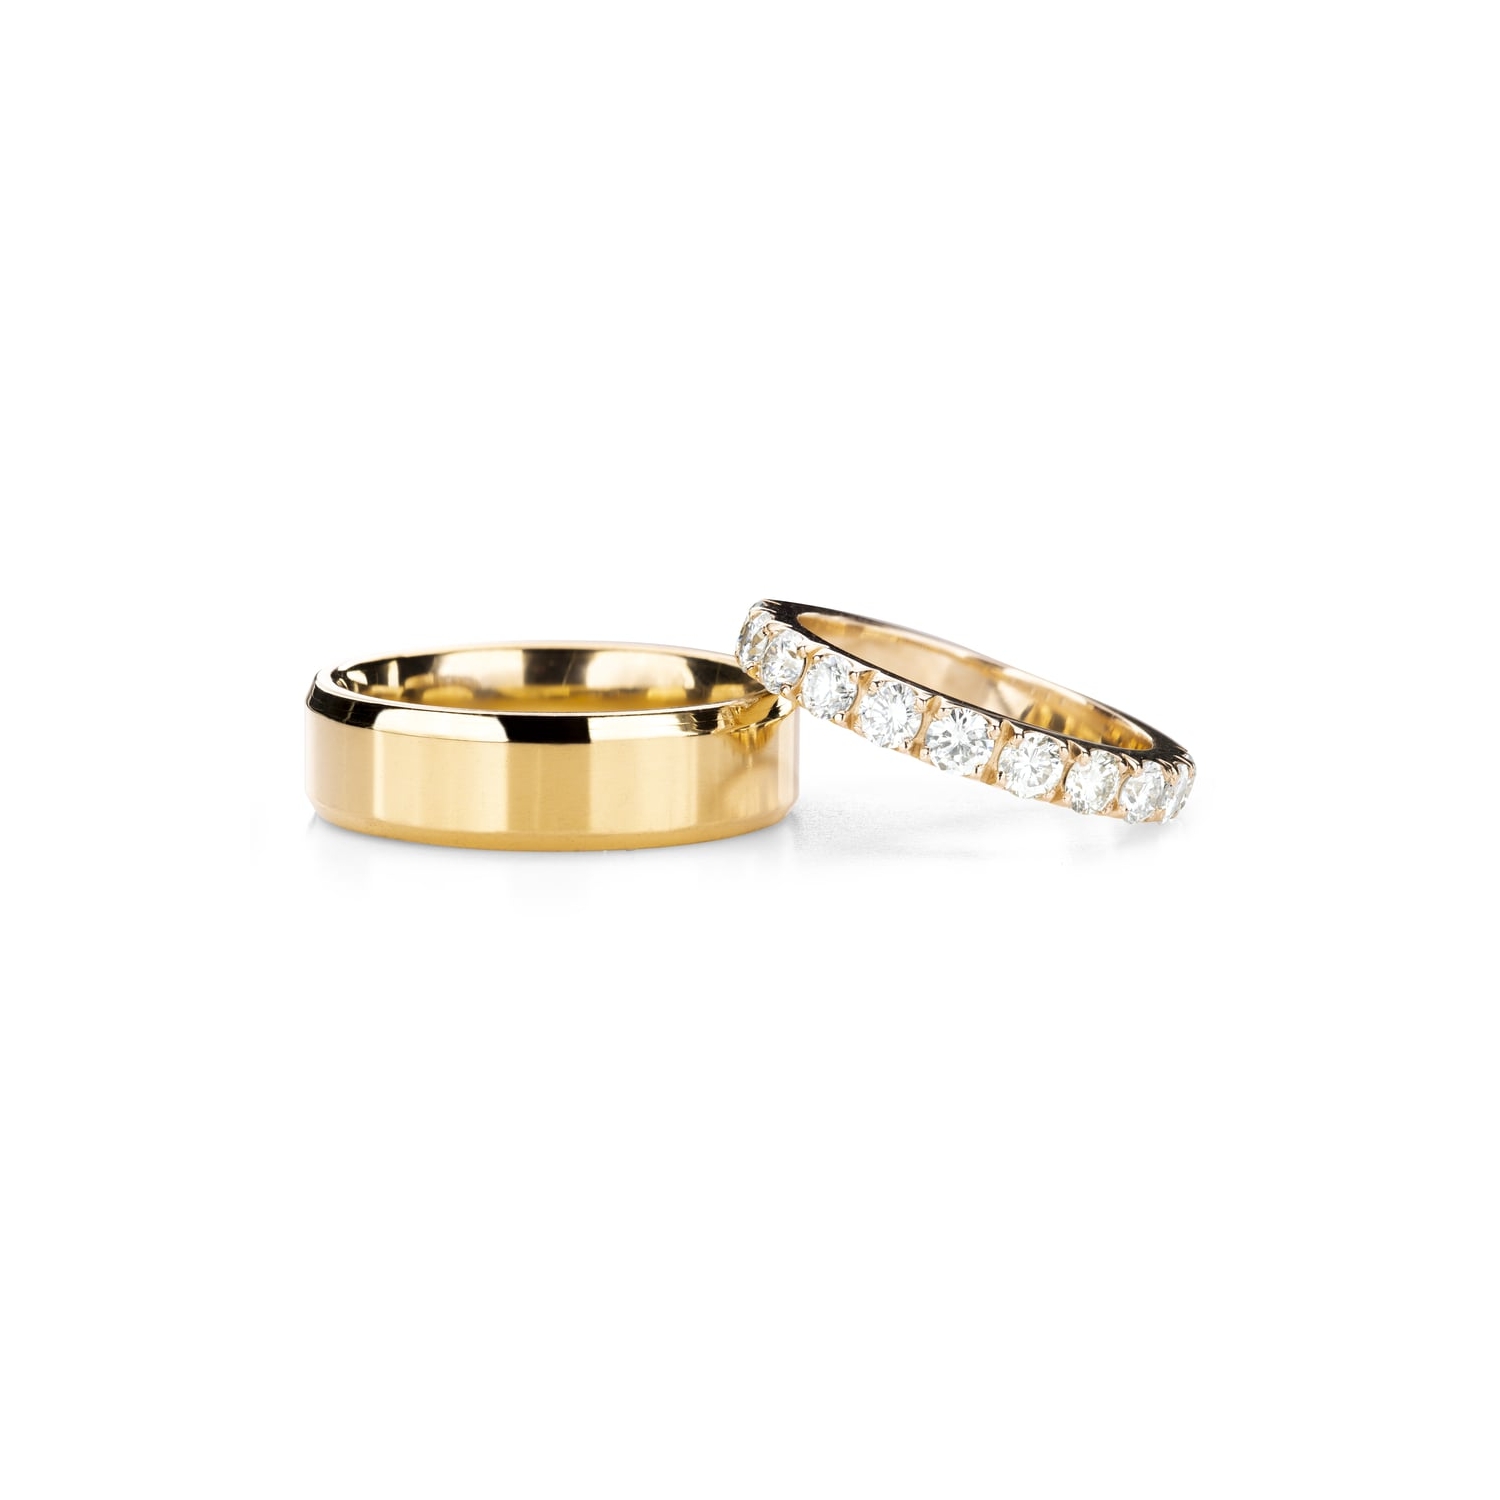 Golden wedding rings with diamonds "VKA 340"